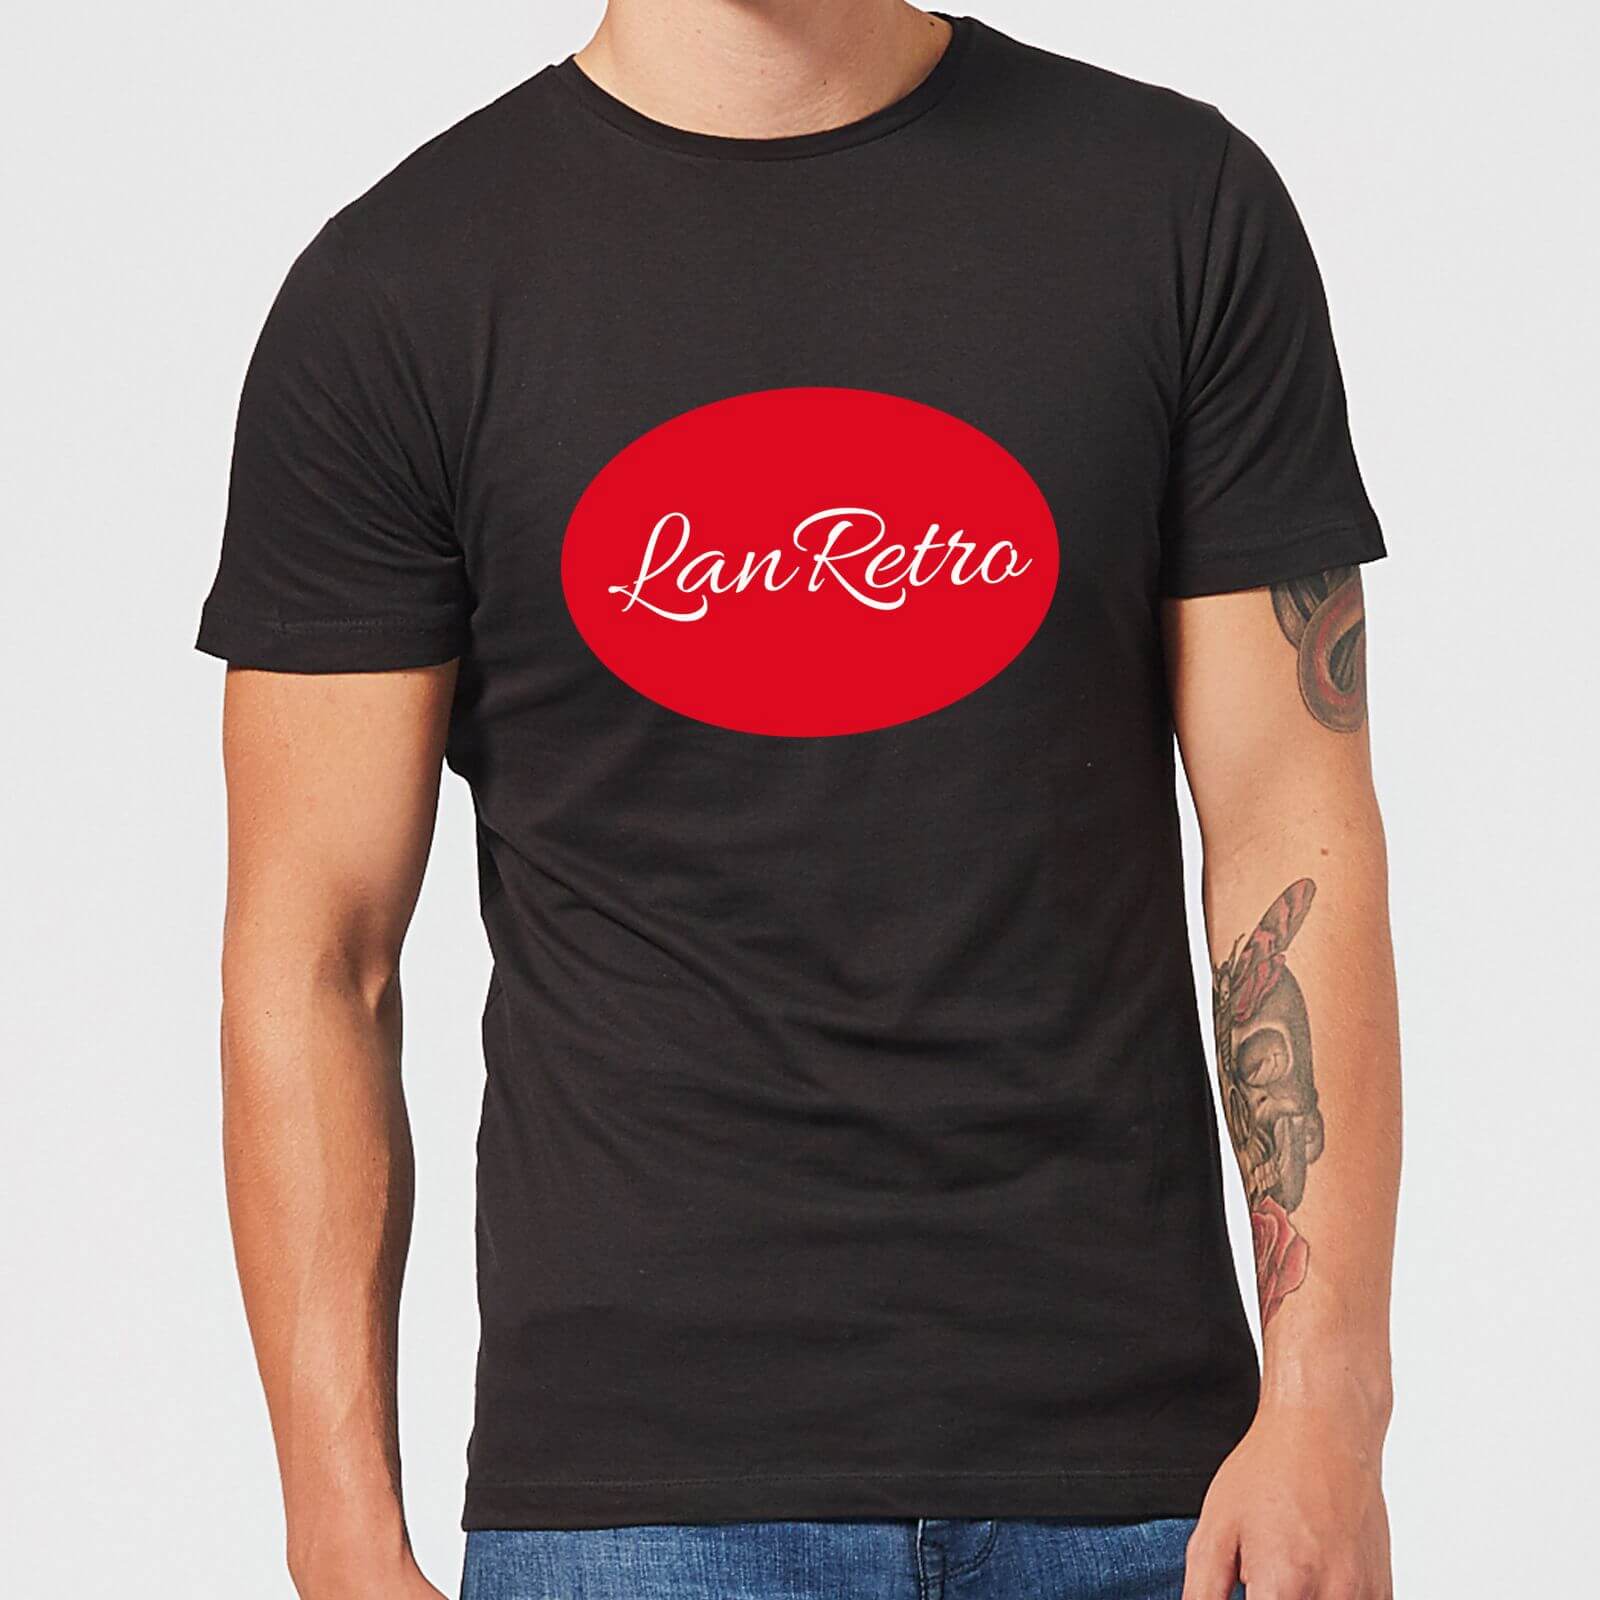 Lanre Retro Lanretro Logo Men's T-Shirt - Black - XL - Black